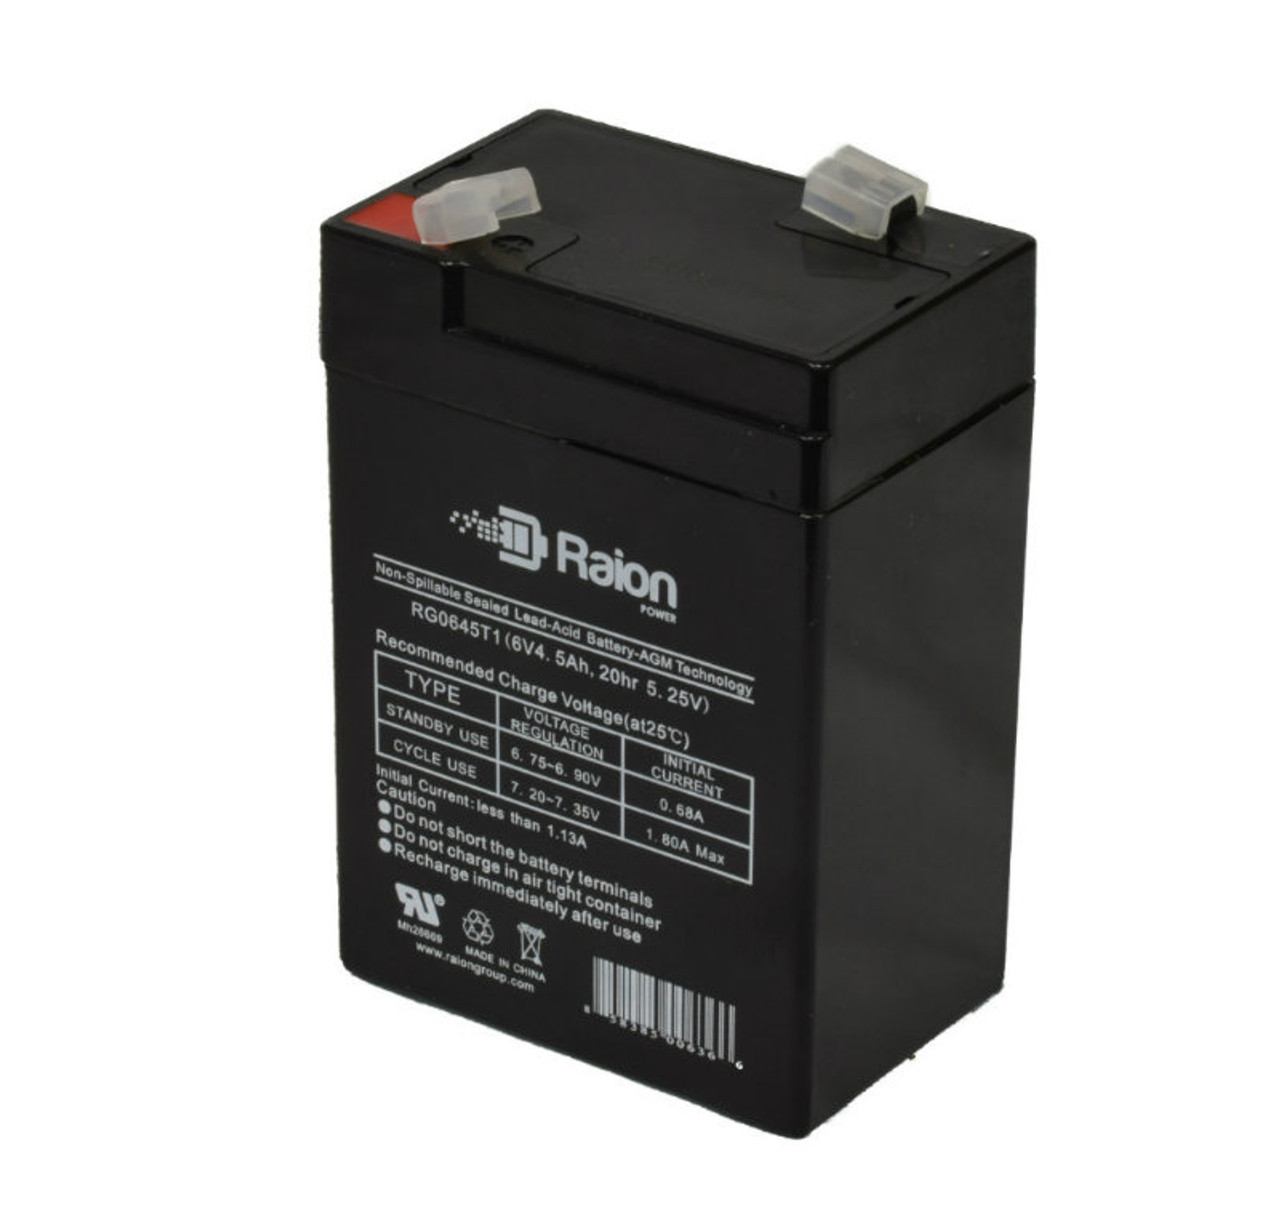 Raion Power RG0645T1 6V 4.5Ah Replacement Battery Cartridge for Sonnenschein 07895391